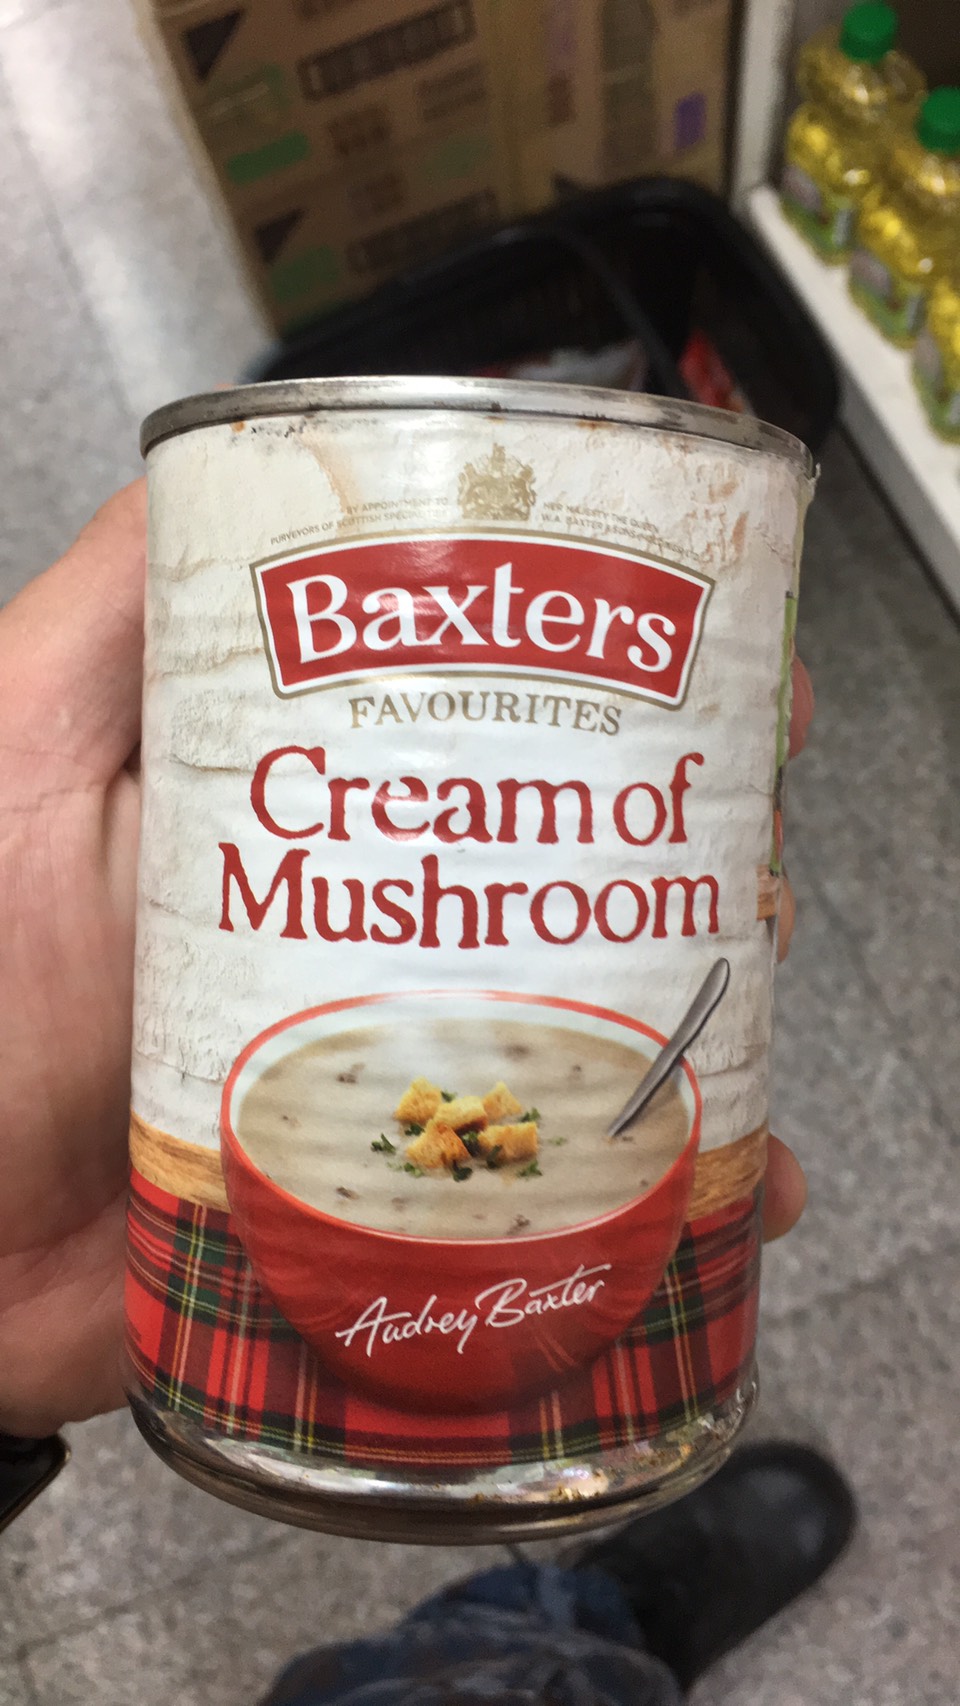 Baxters cream of mushroom soup แบ็กซ์เตอร์ ซุปครีมเห็ด 400g